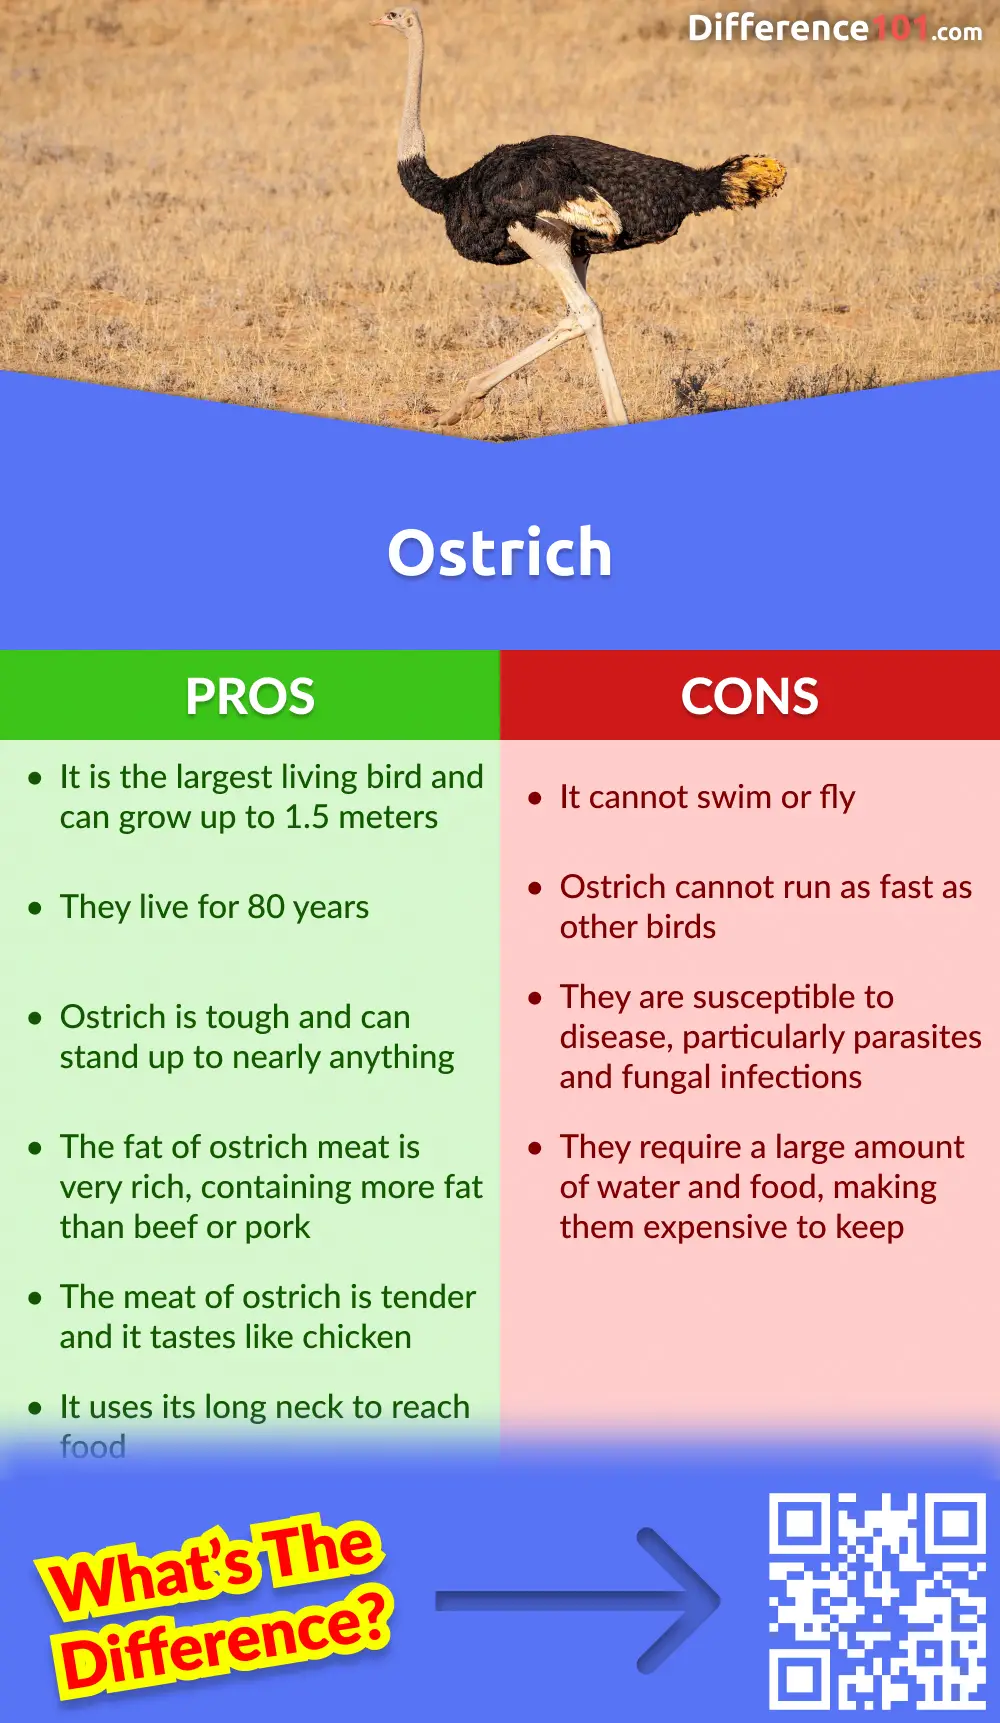 Ostrich Pros & Cons
